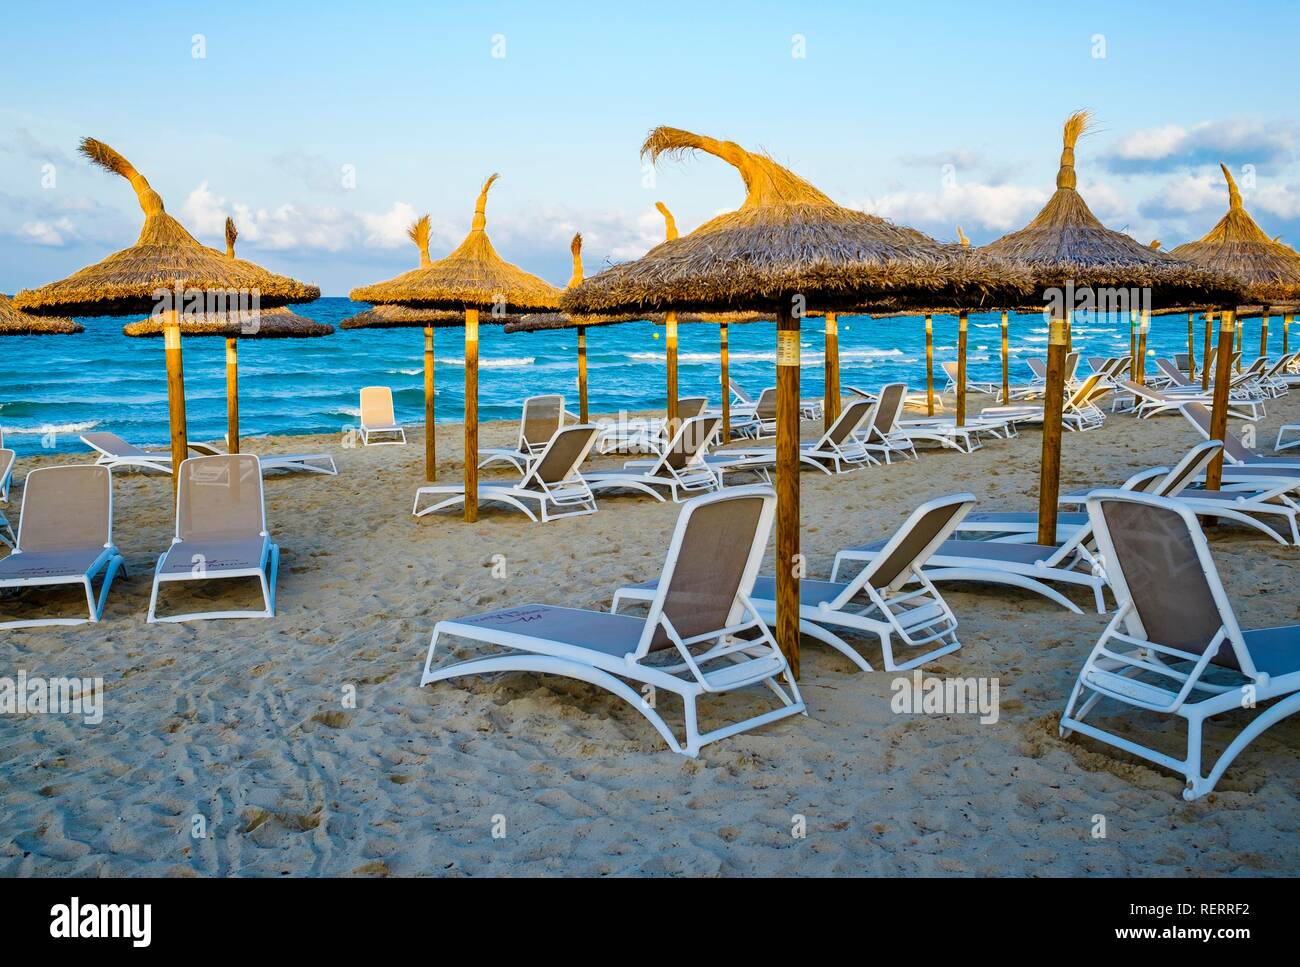 Empty sunbeds and parasols on the beach, Platja de Muro, Mallorca/Balearic Islands, Spain Stock Photo